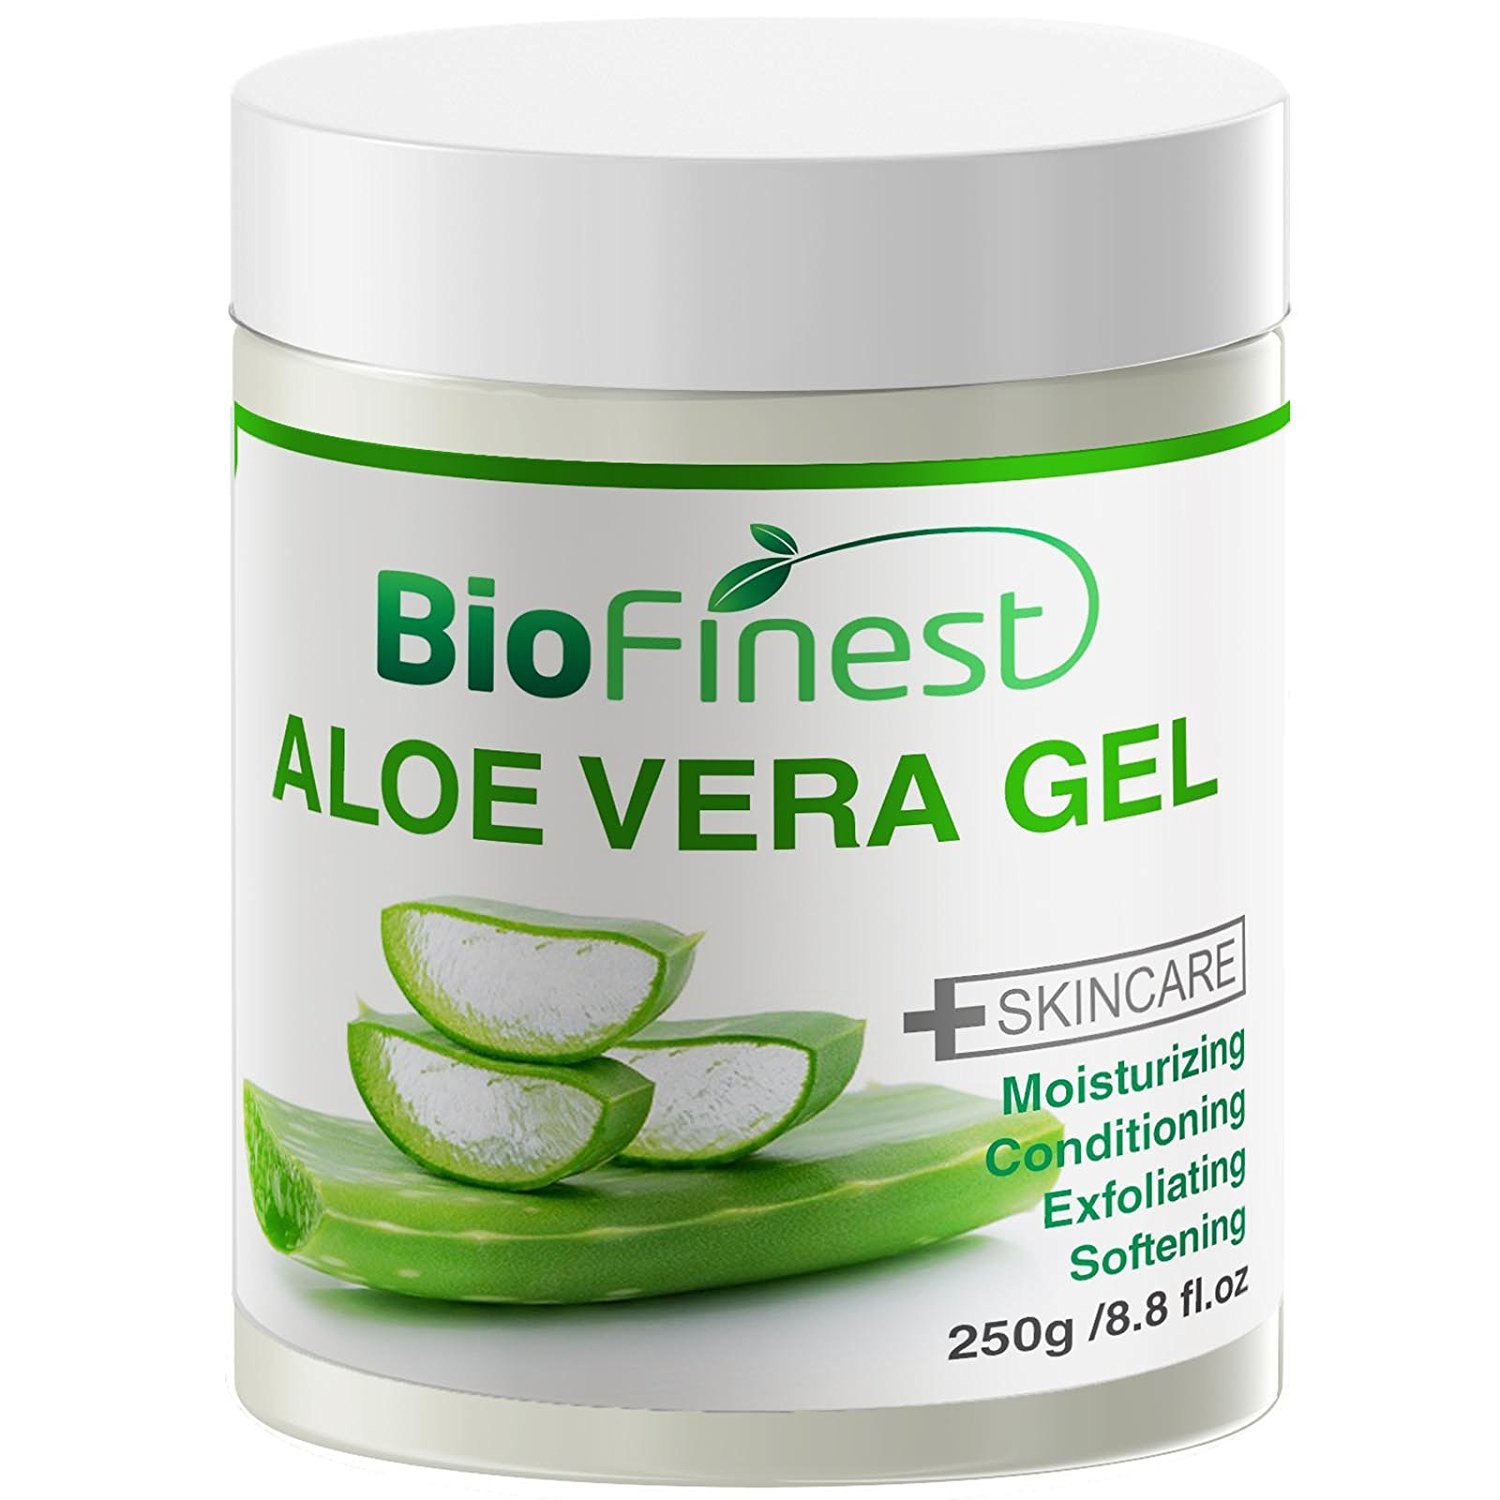 Biofinest Aloe Vera Gel